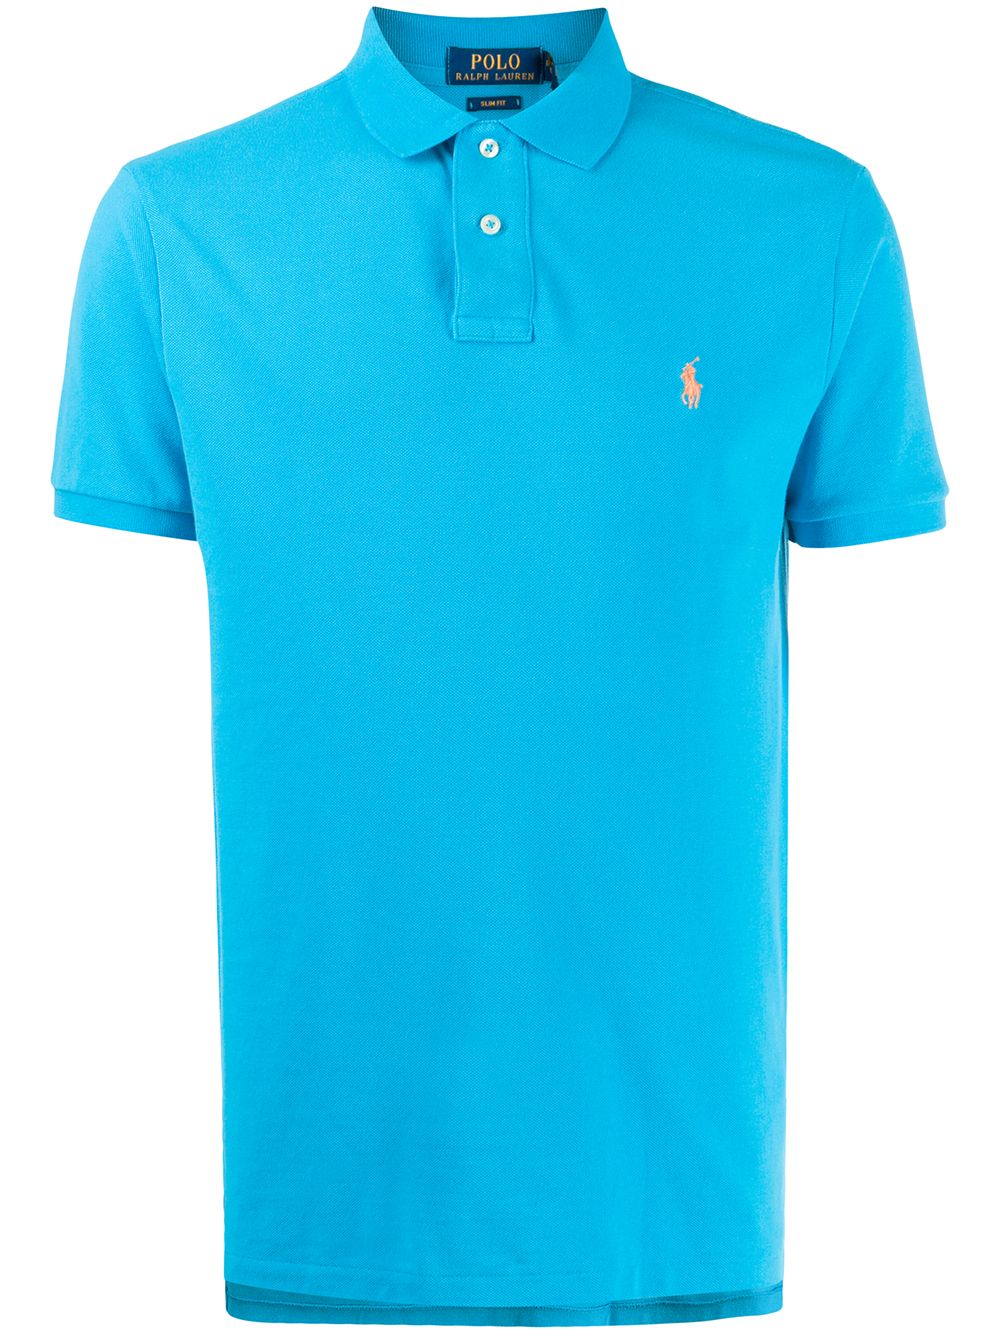 Polo Ralph Lauren embroidered logo polo shirt - Blue von Polo Ralph Lauren